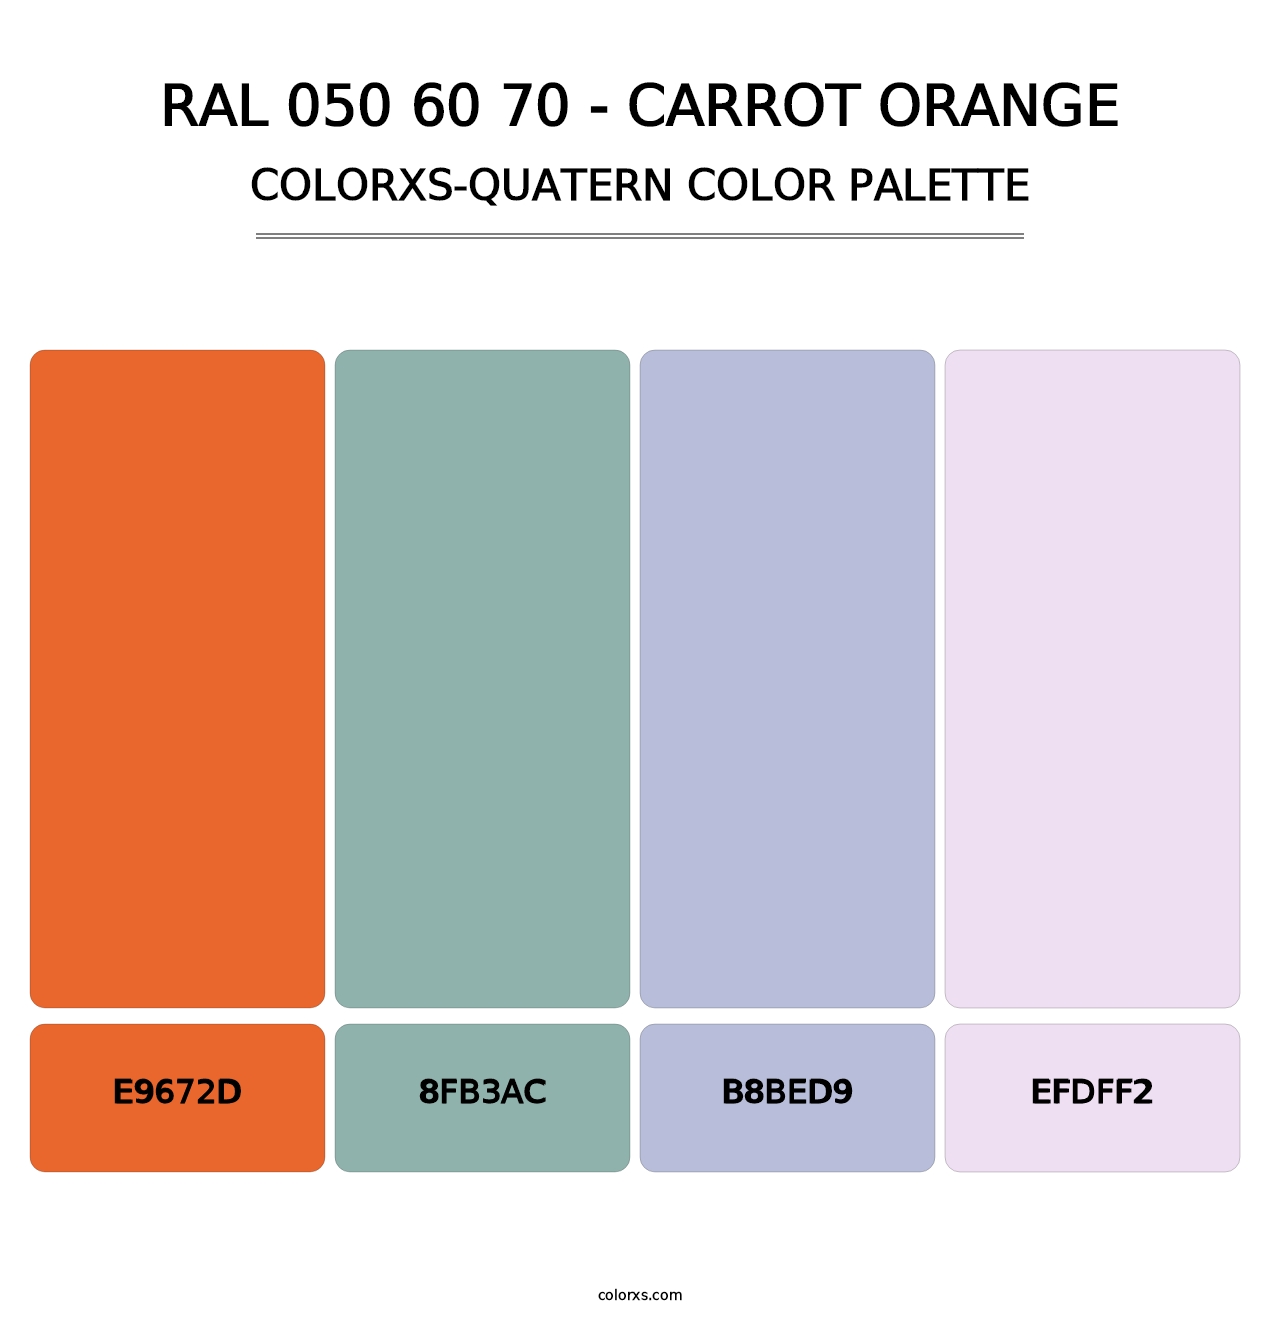 RAL 050 60 70 - Carrot Orange - Colorxs Quatern Palette